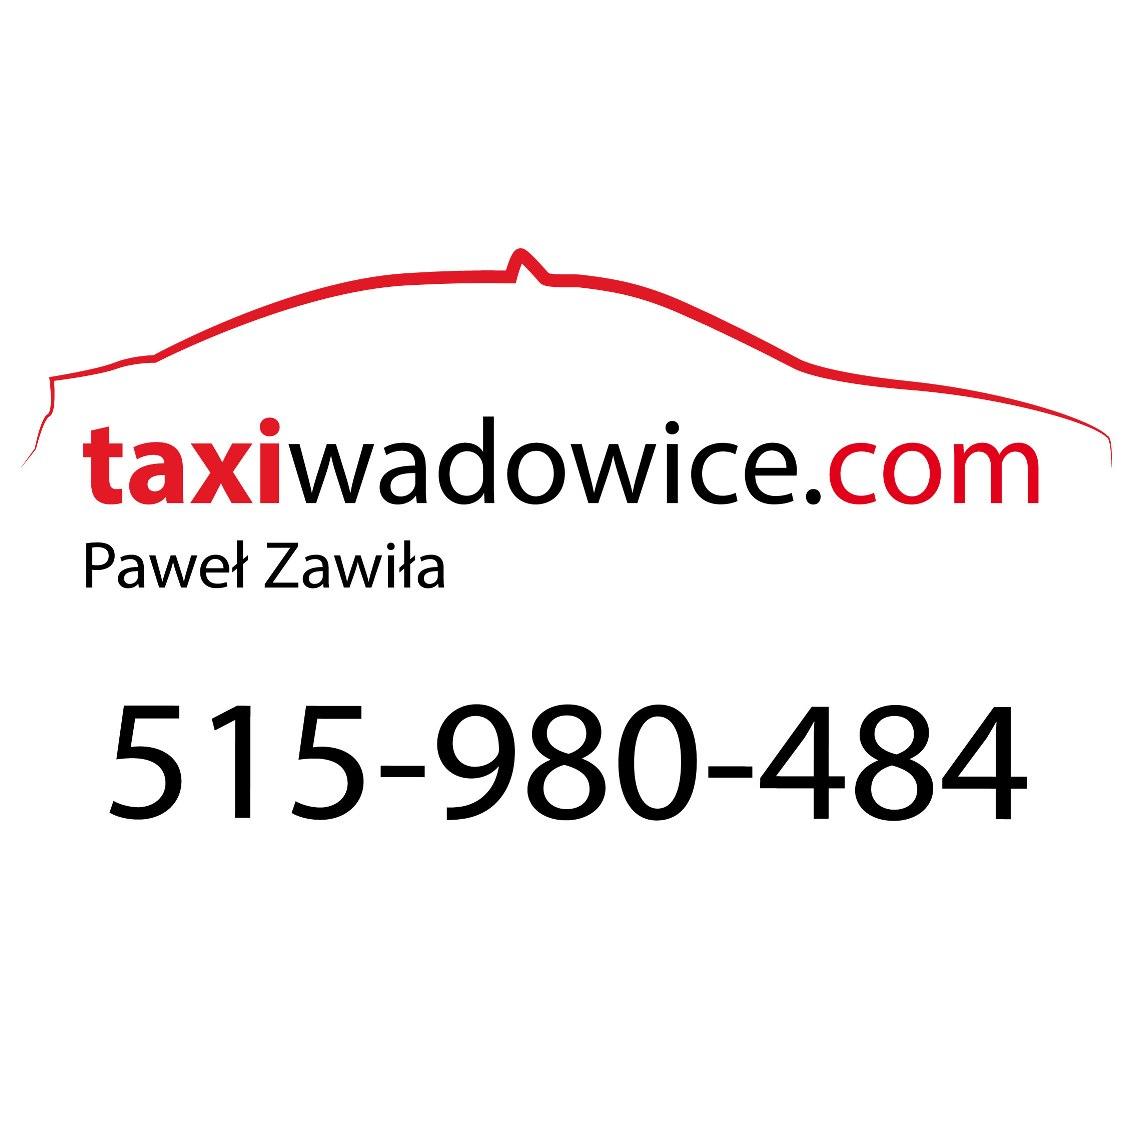 Taxi Wadowice